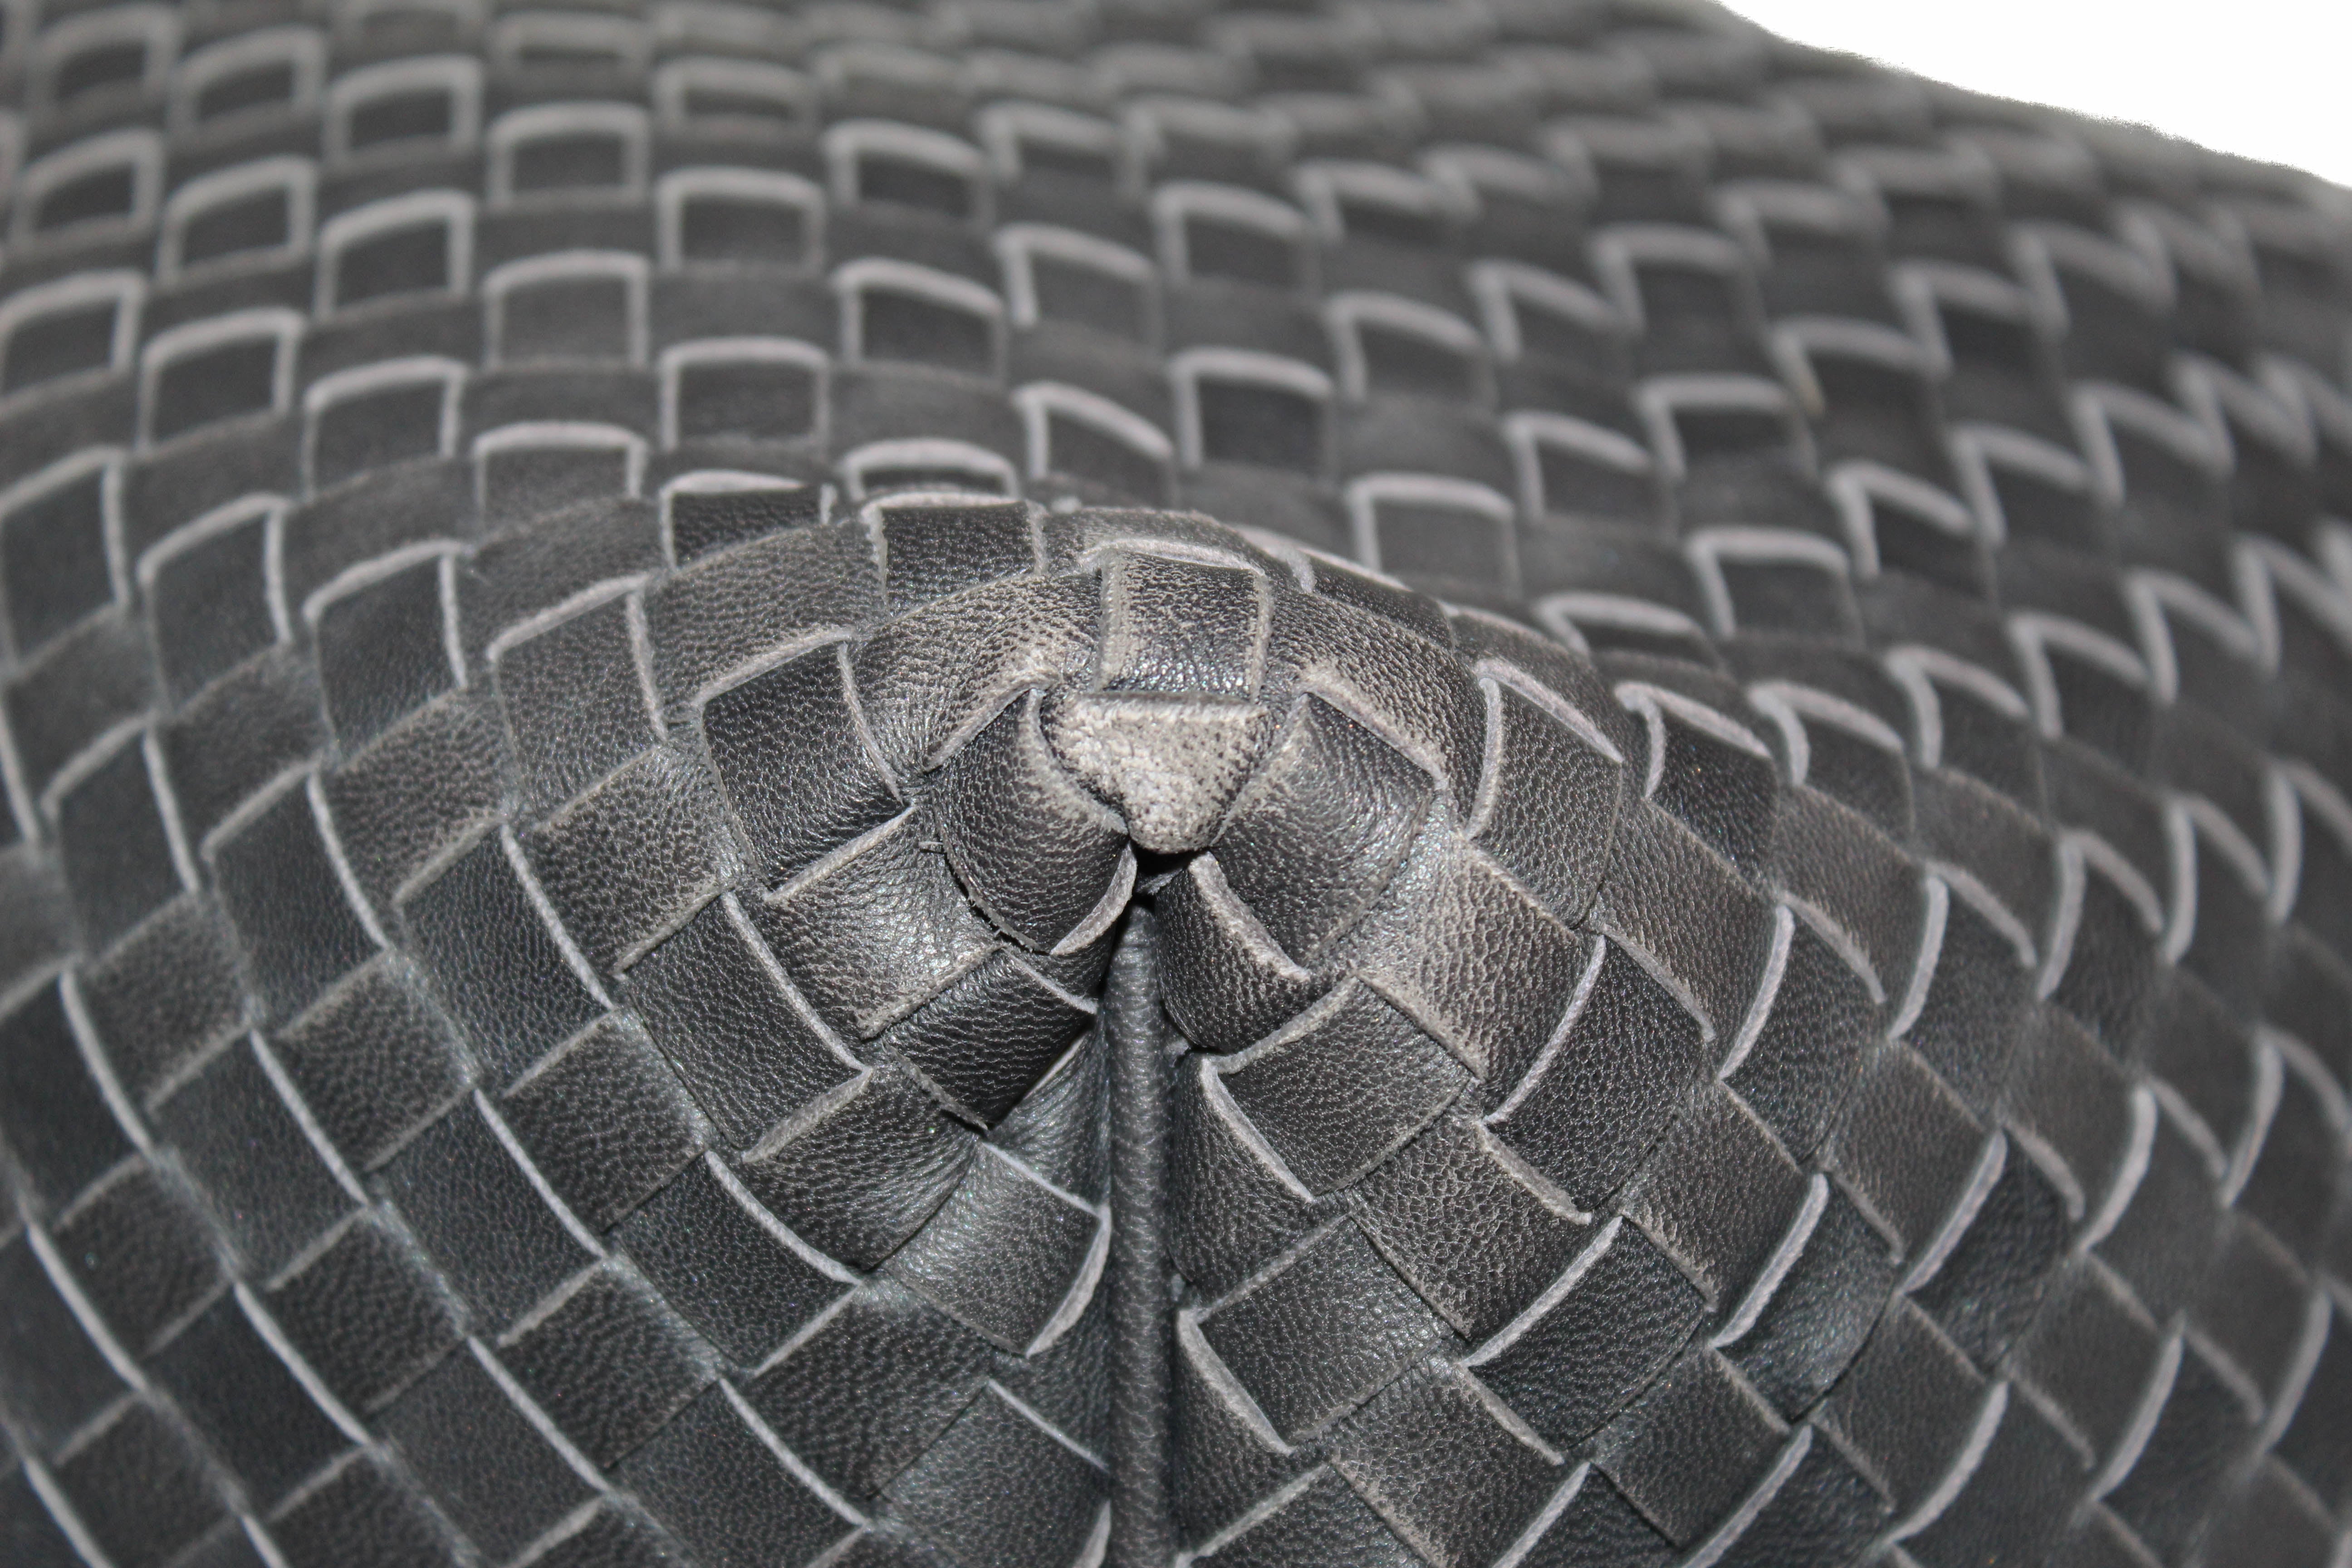 Authentic Bottega Veneta Grey Nappa Leather Intrecciato Woven Sloane Hobo Shoulder Bag